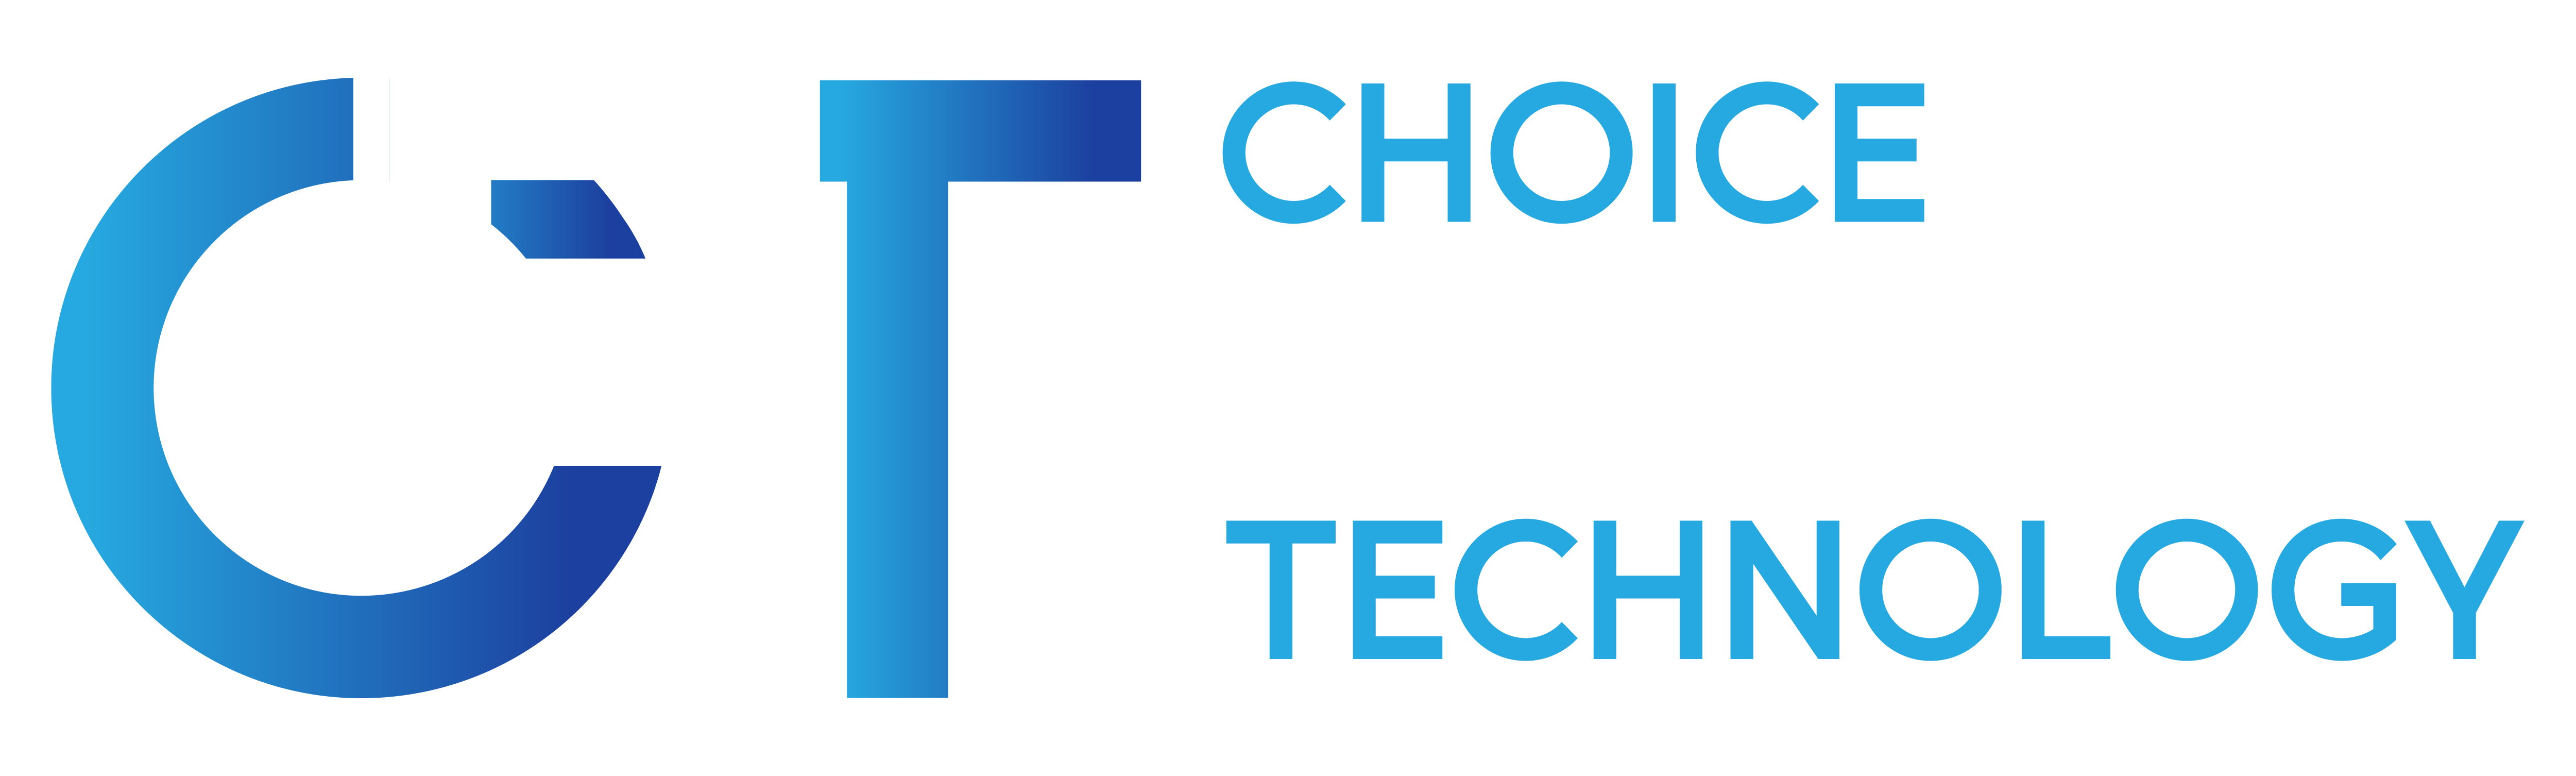 Choice Enterprise Technology